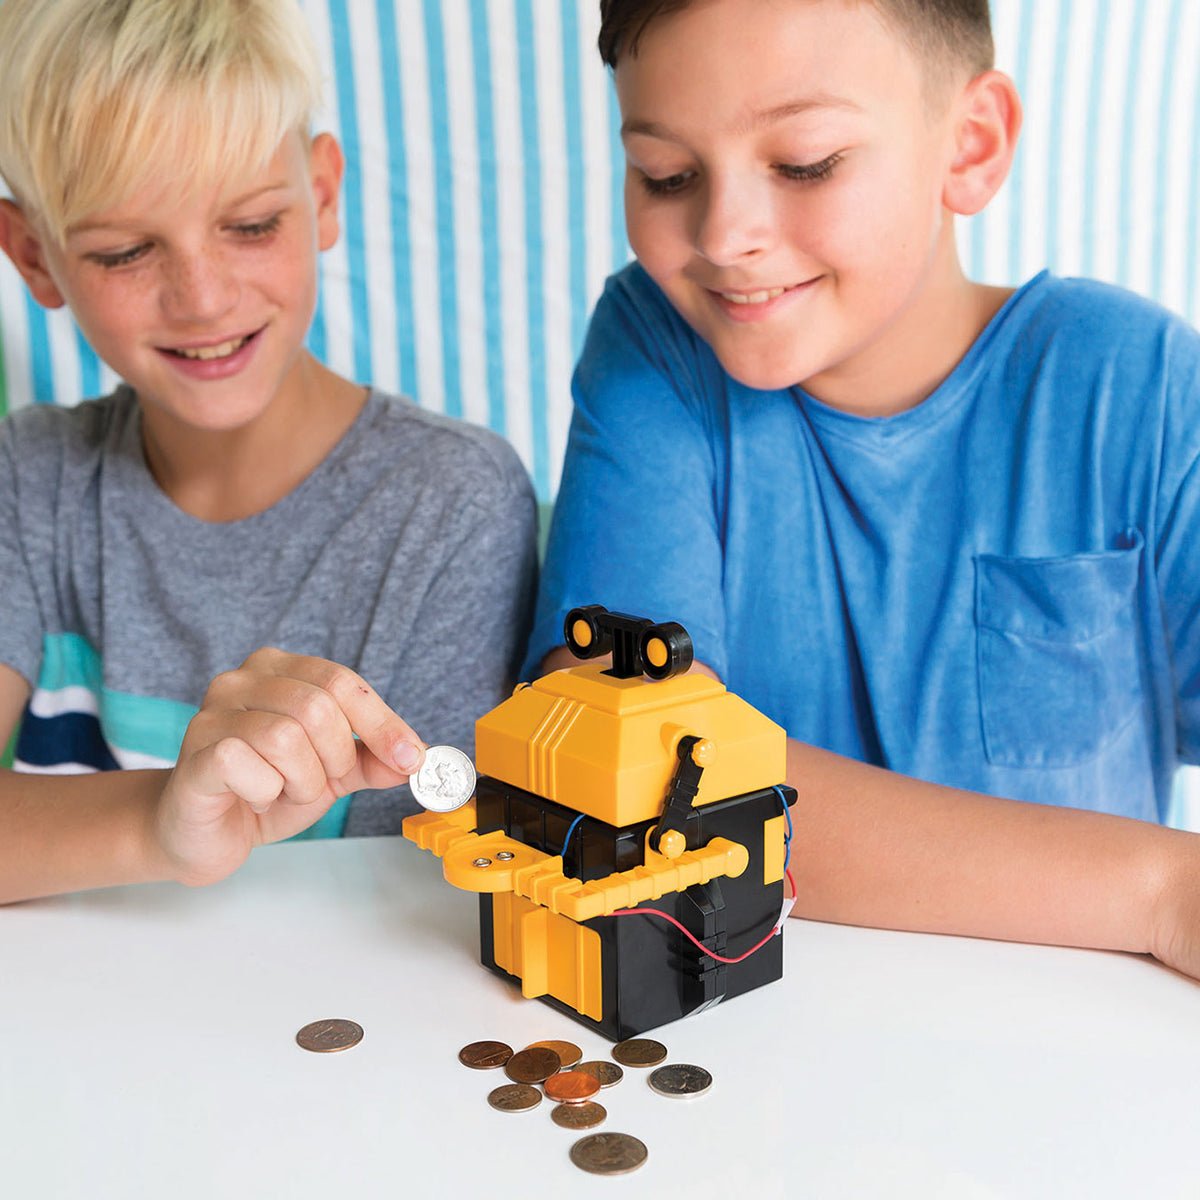 KidzRobotix Money Box Robot | 4M Toys